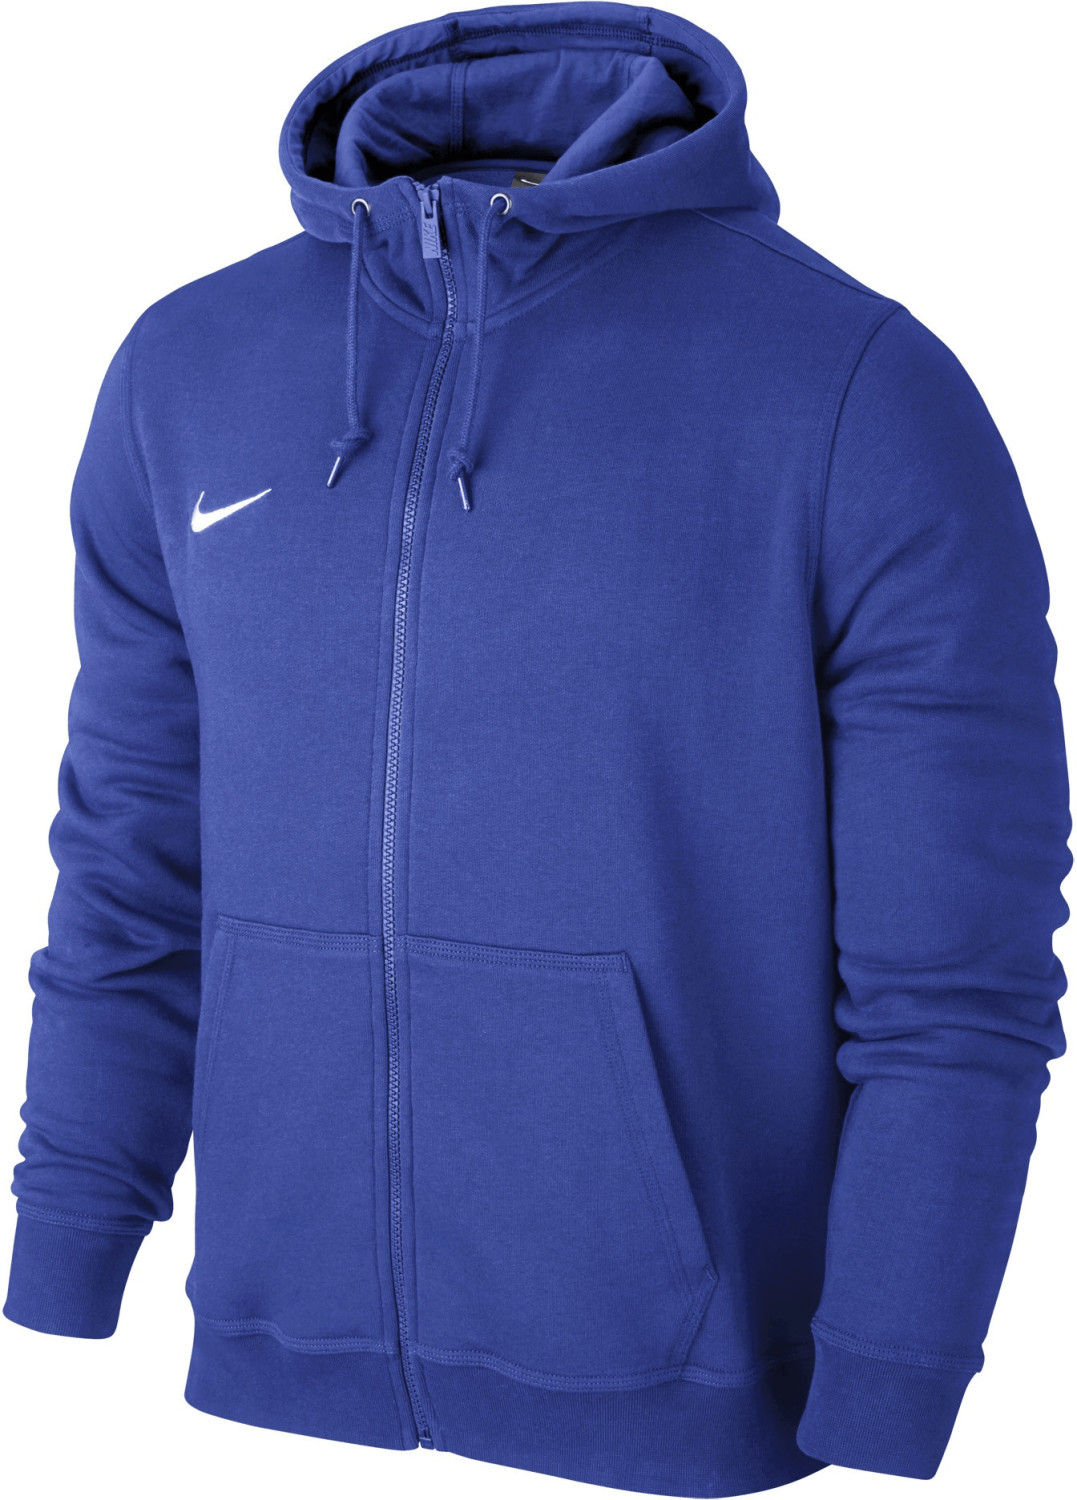 Nike Team Club Full Zip (658497-463) royal blue